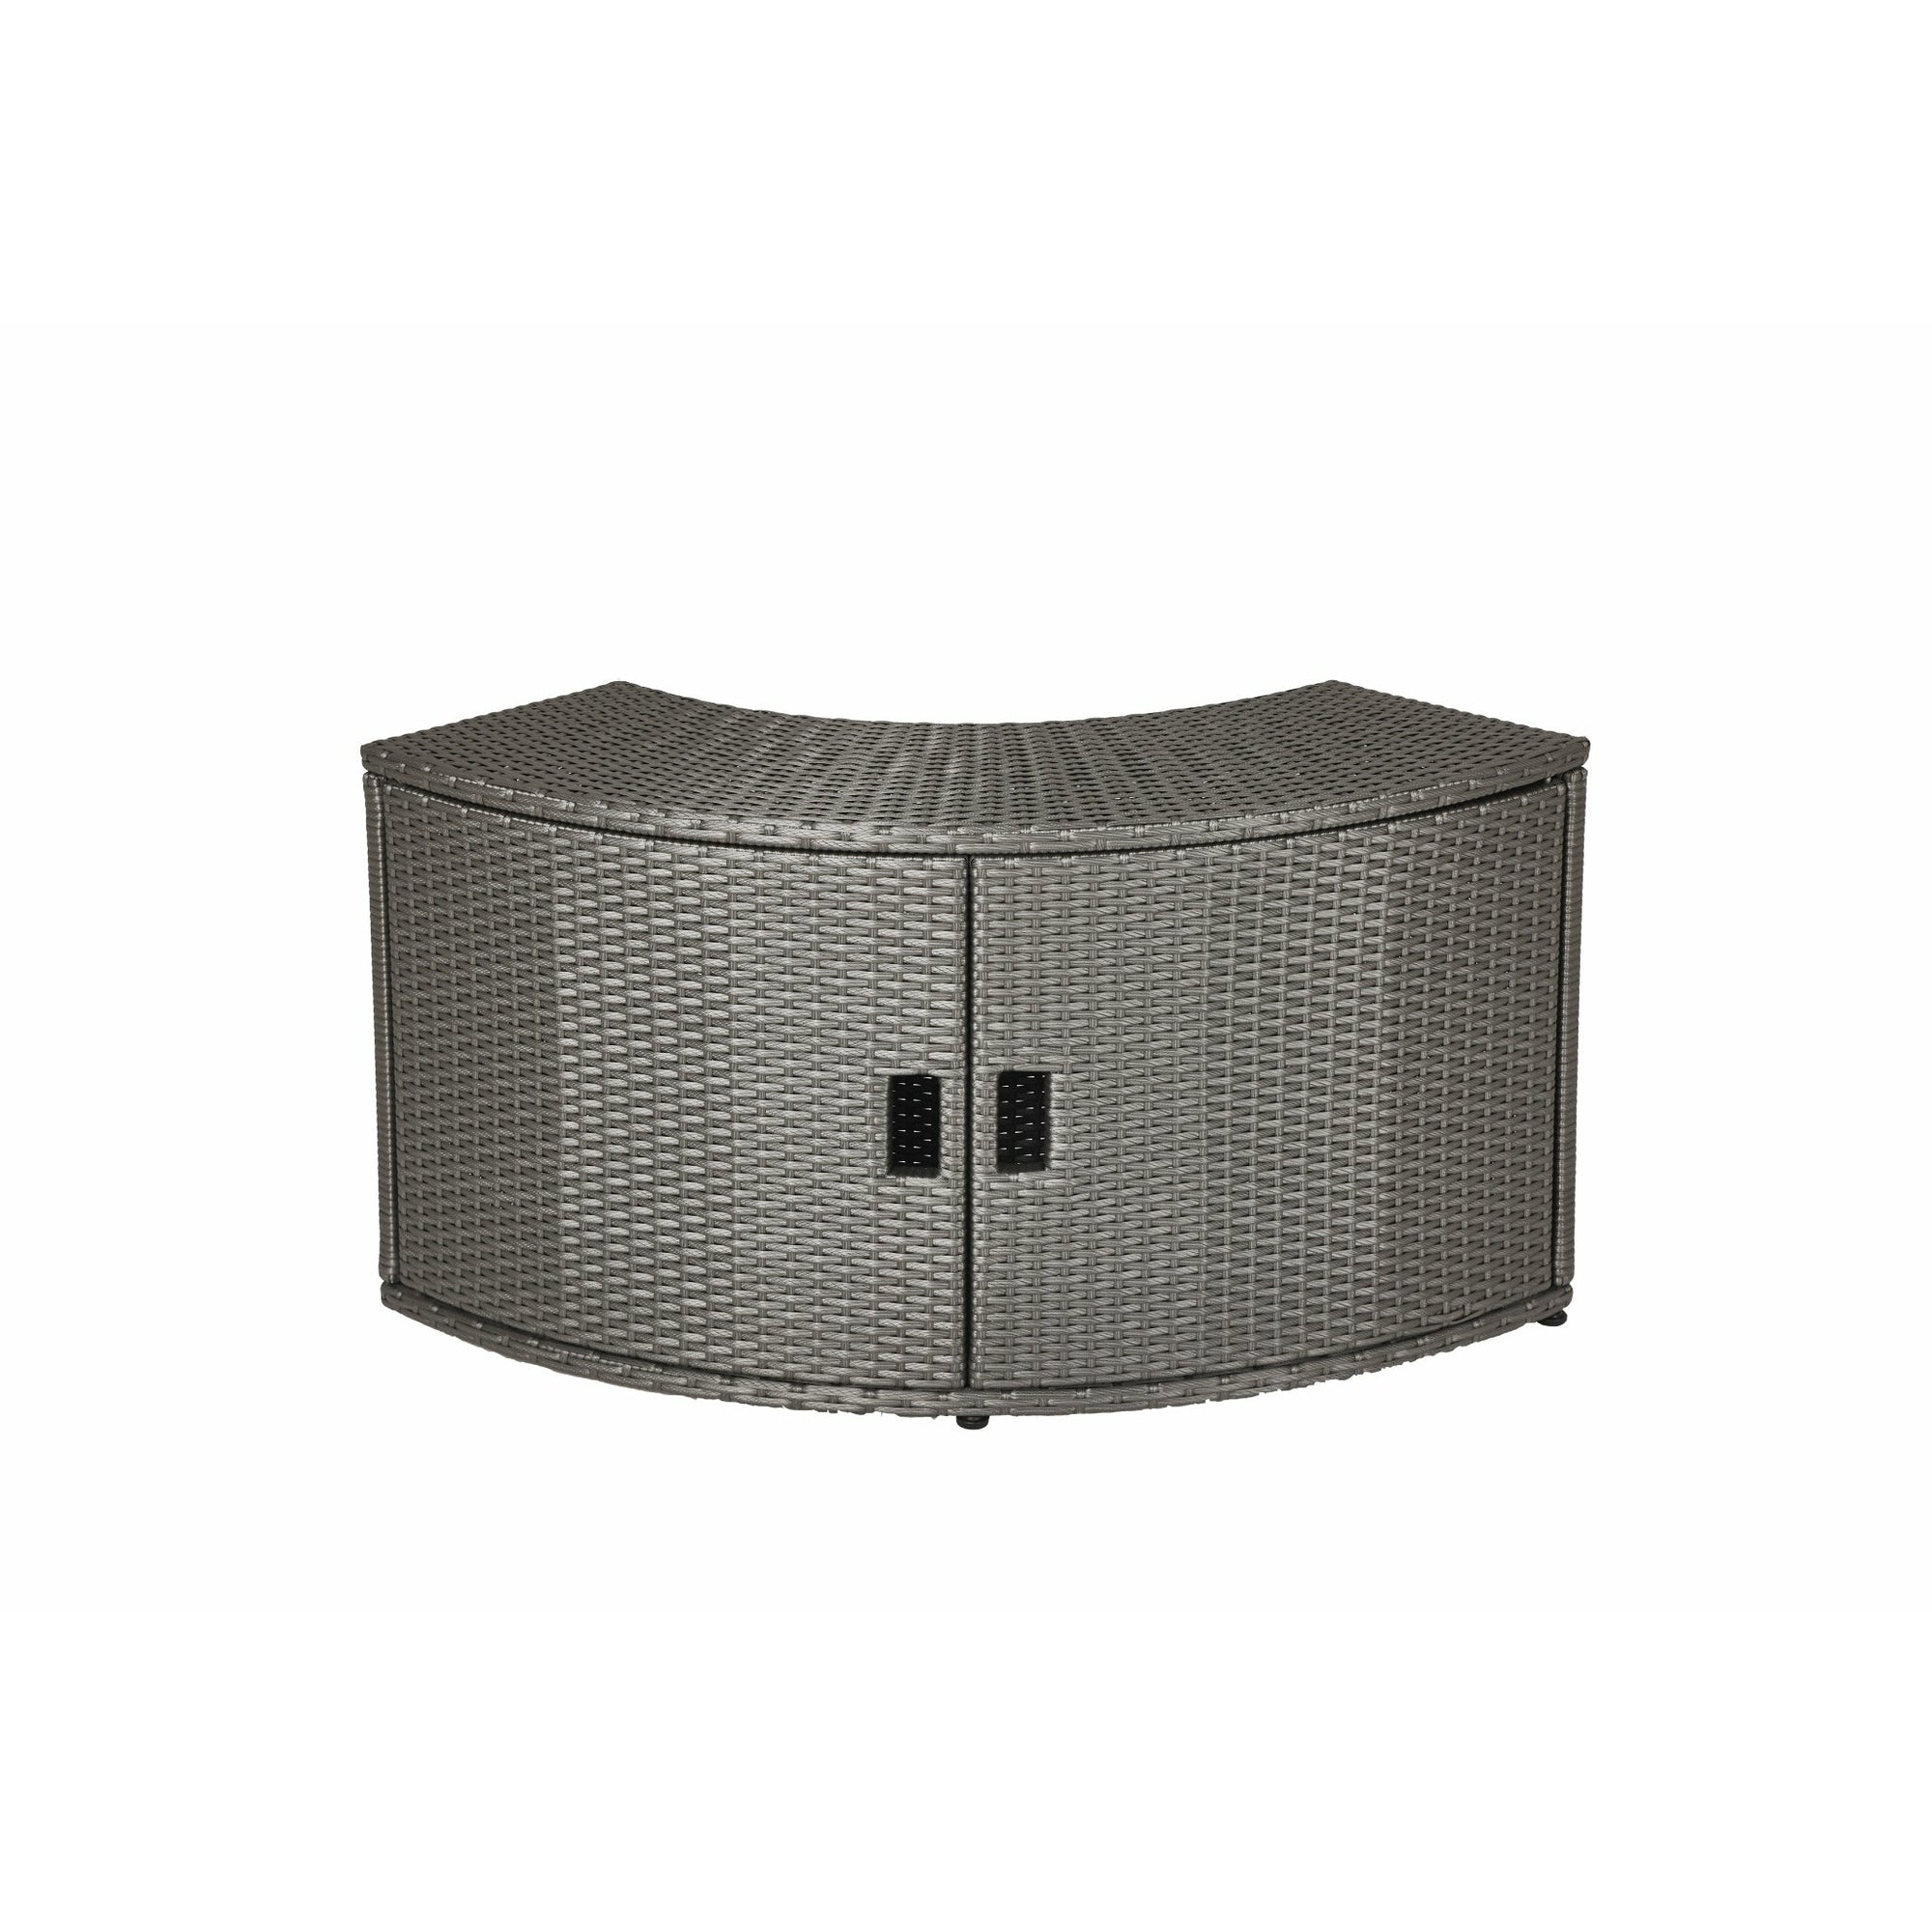 MSpa Wicker Cabinet Storage Unit for Square Spa - cool grey color in a white background